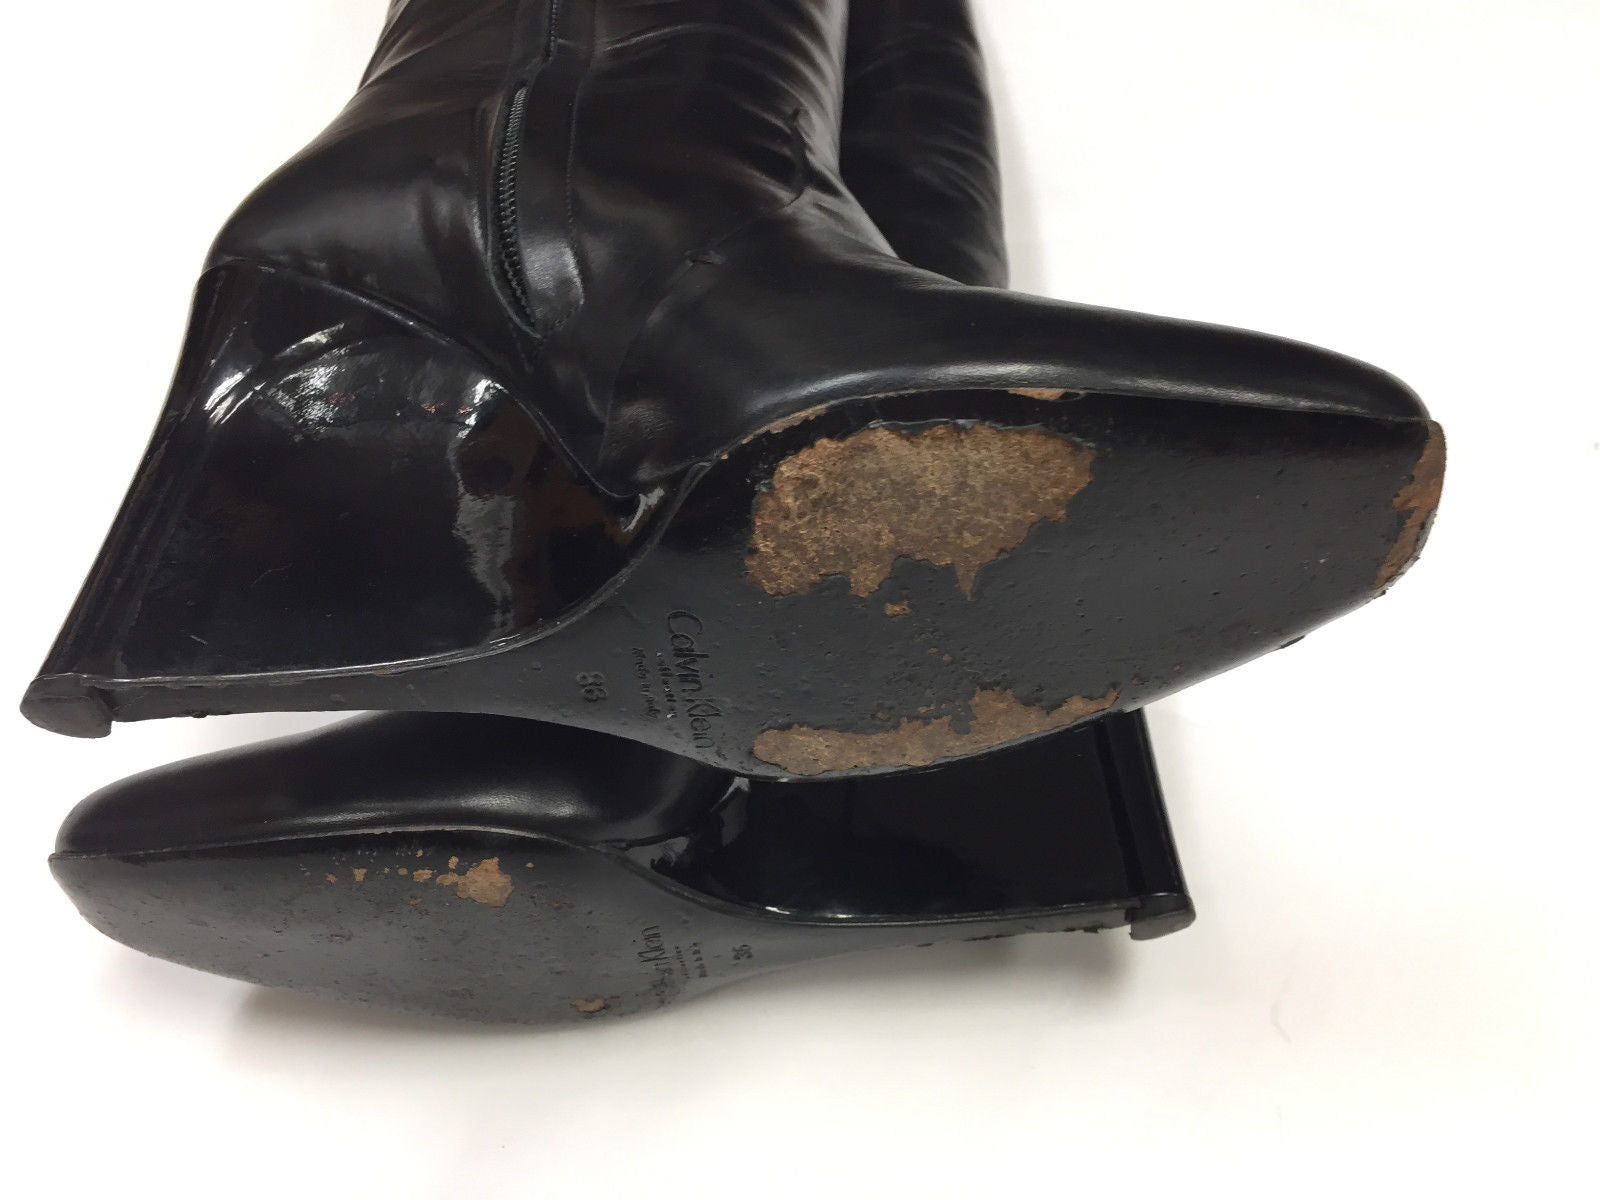 calvin klein black leather booties